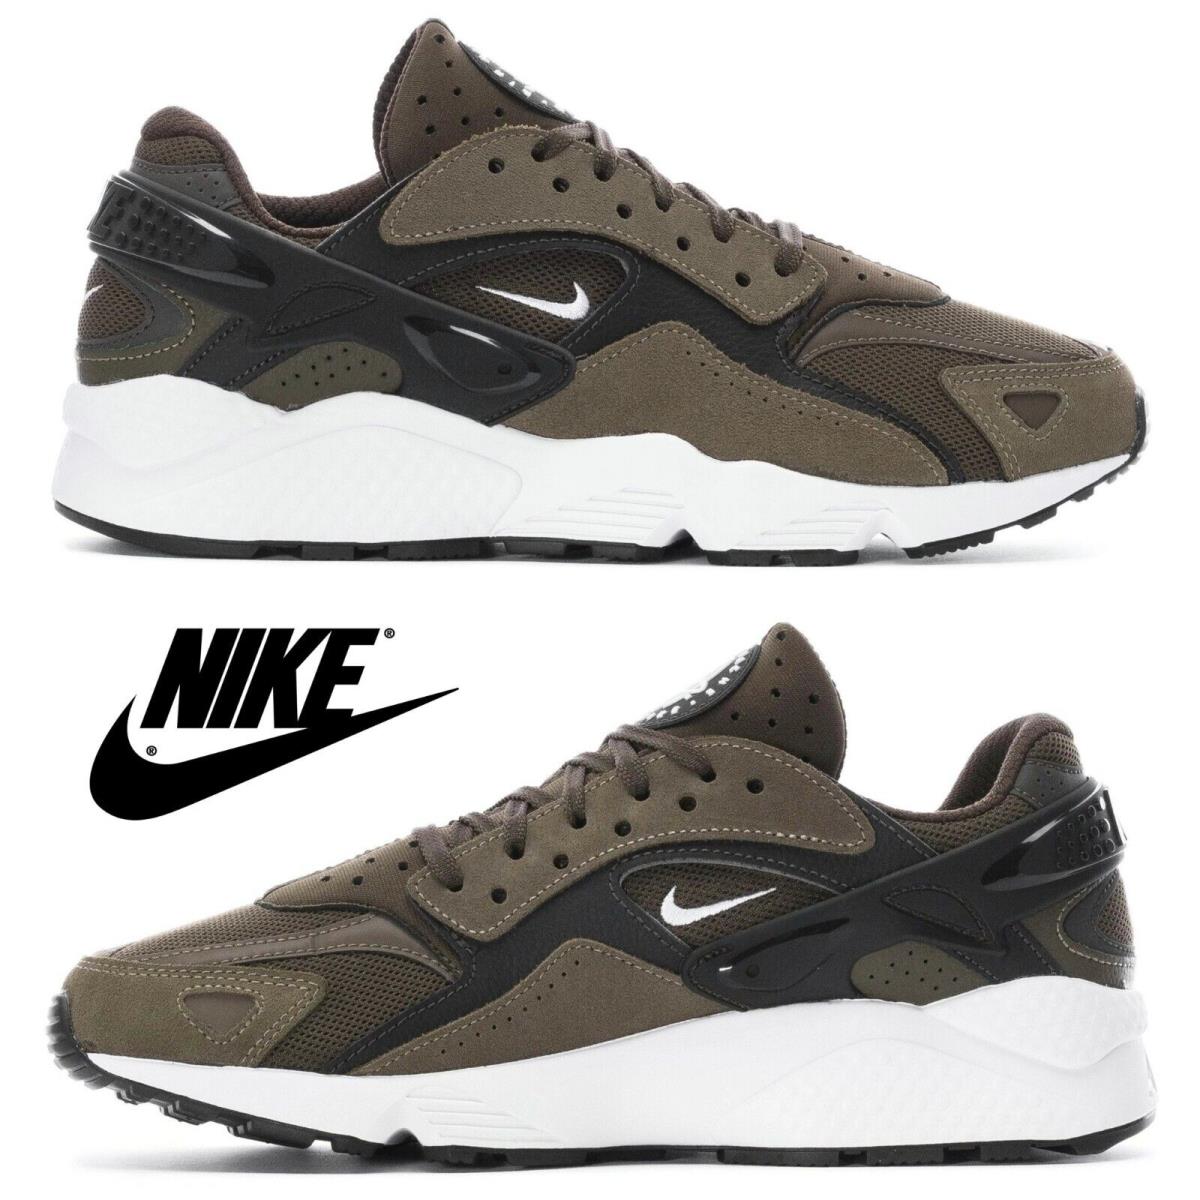 Nike Air Huarache Runner Men`s Casual Shoes Running Athletic Comfort Sport Khaki